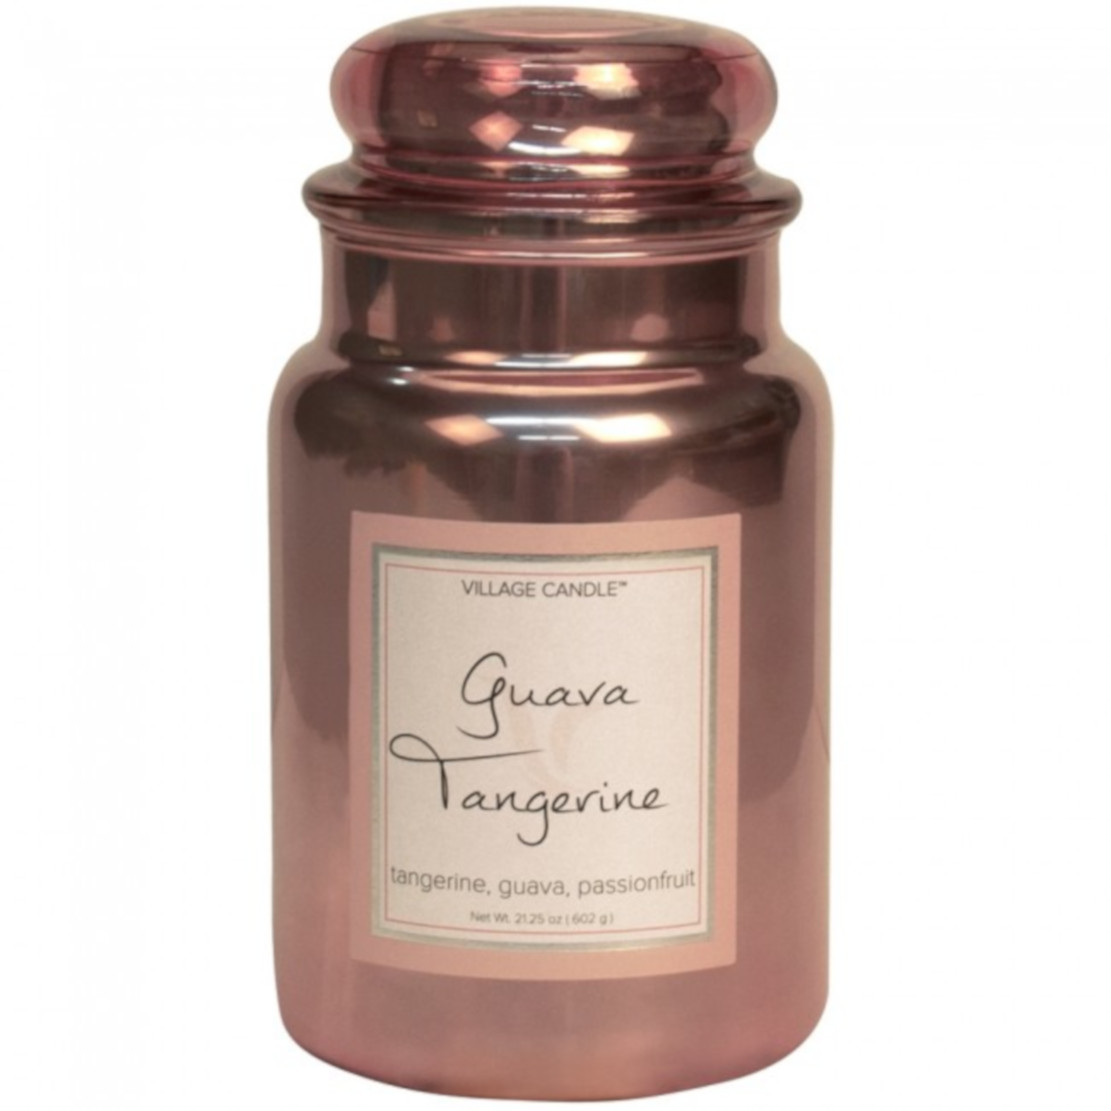 Village Guava Tangerine Large Jar Candle 602g